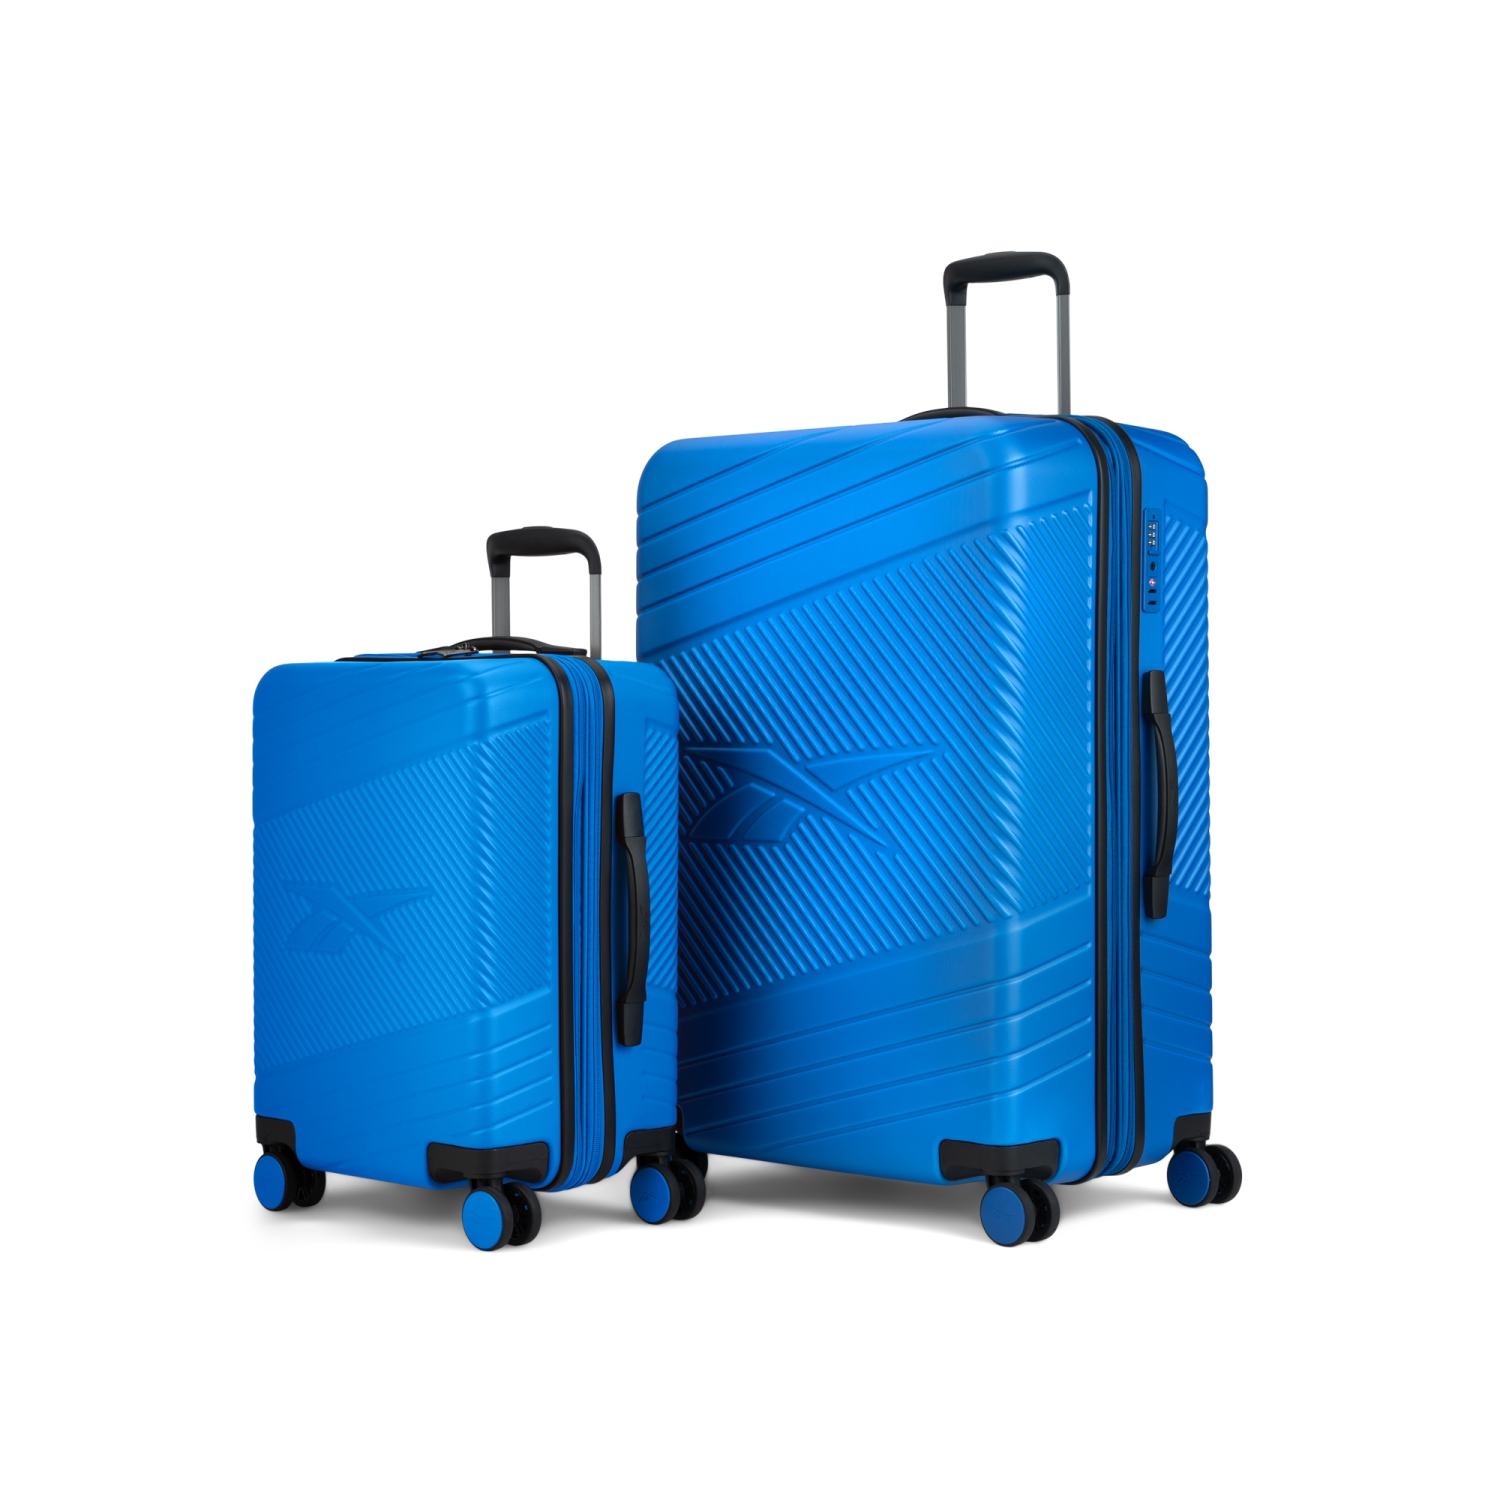 Reebok Go Collection - 2 pcs Luggage Set - Blue